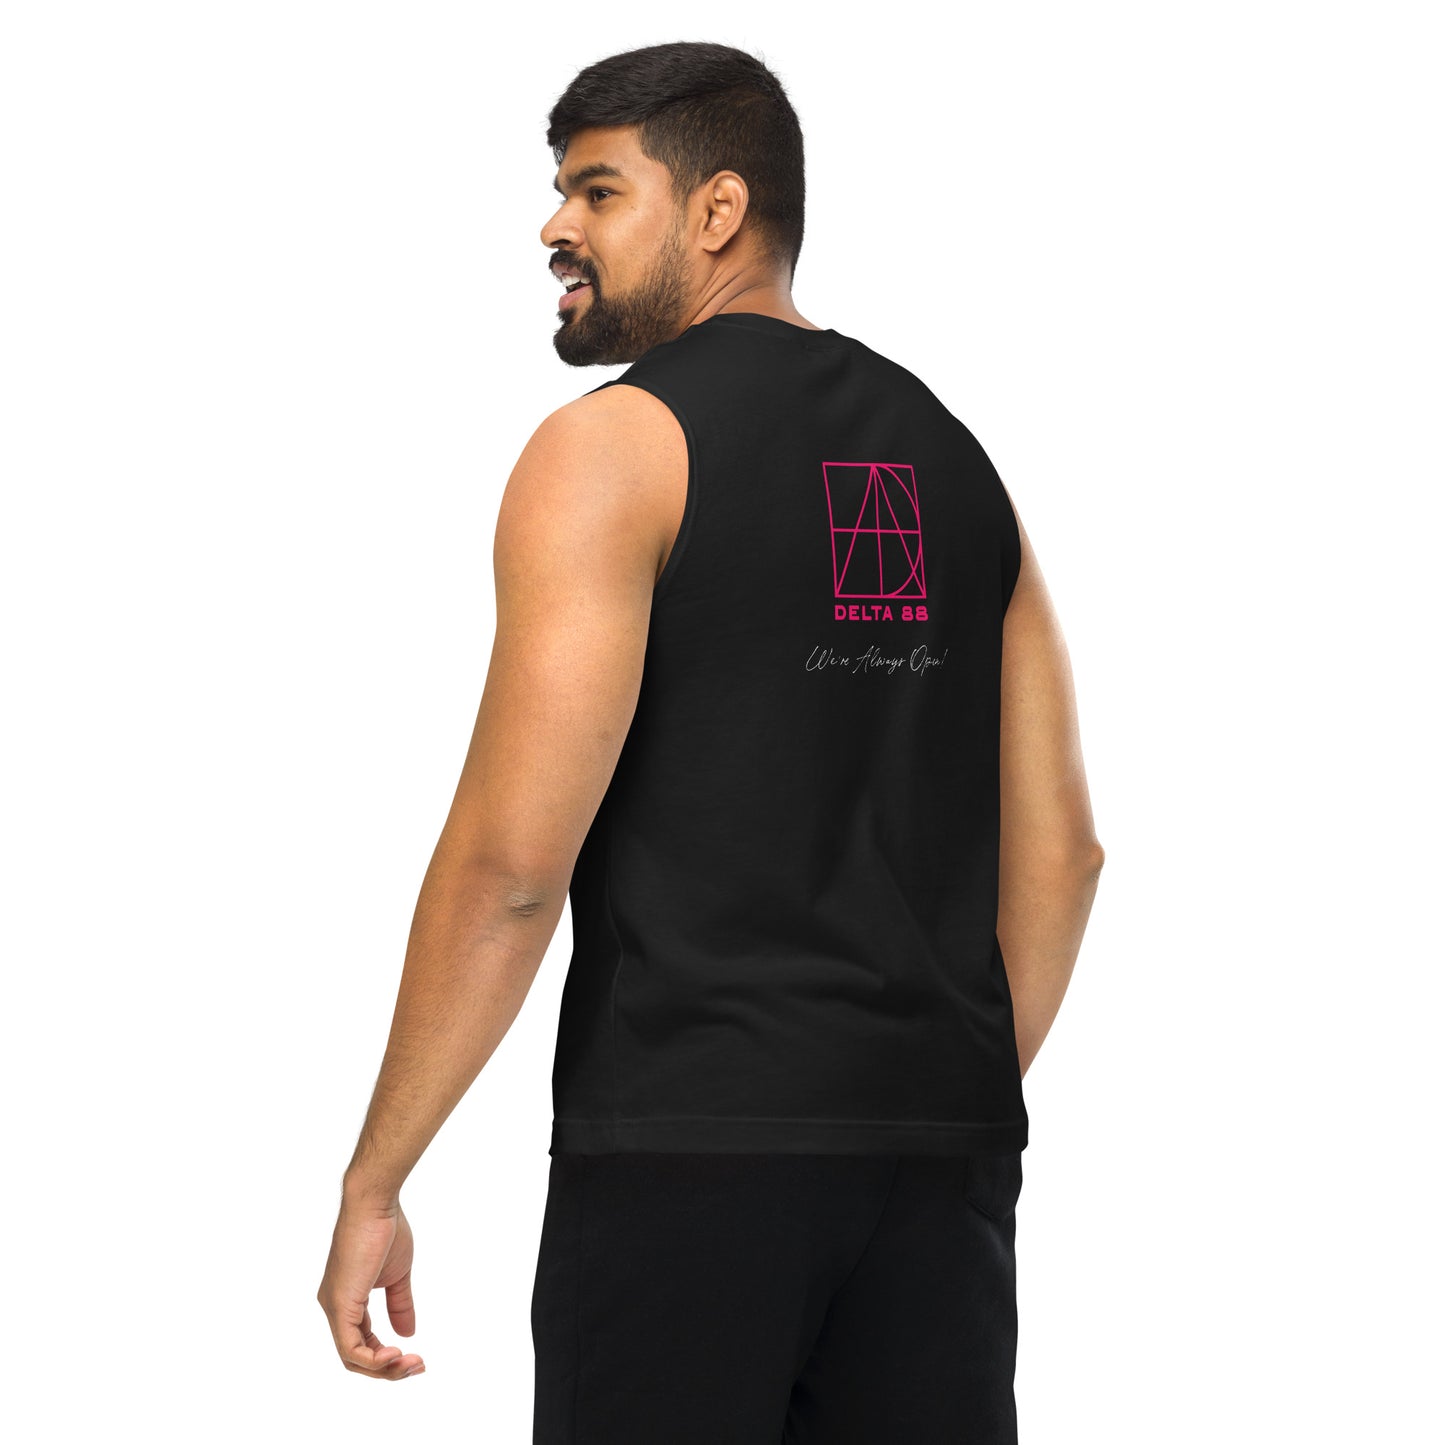 DELTA 88 Black Muscle Shirt